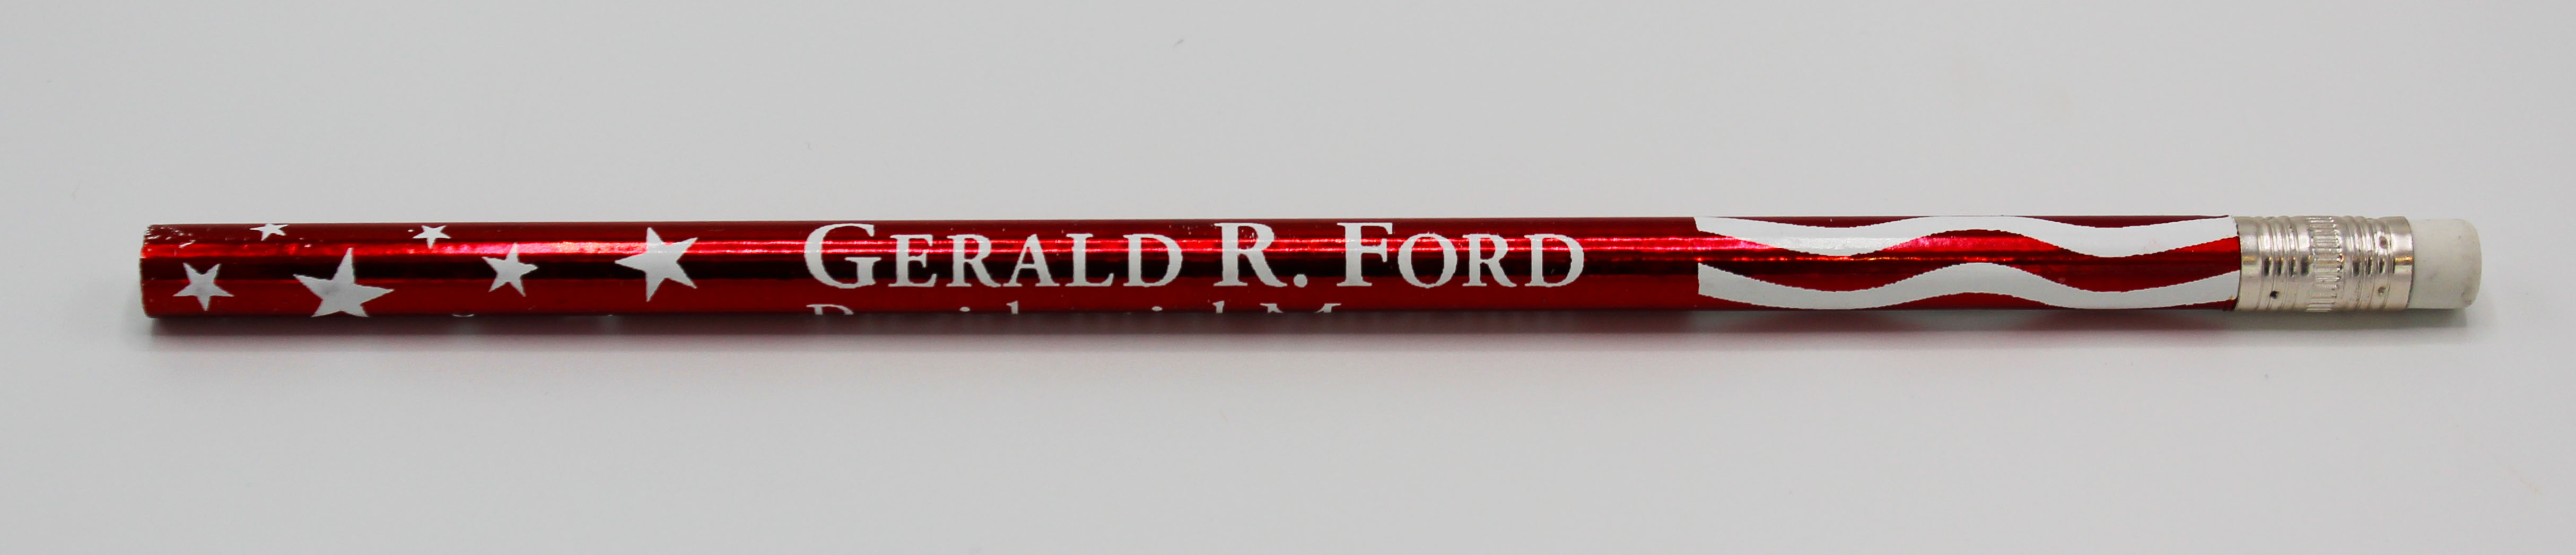 Pencil, Gerald R. Ford Museum Imprint